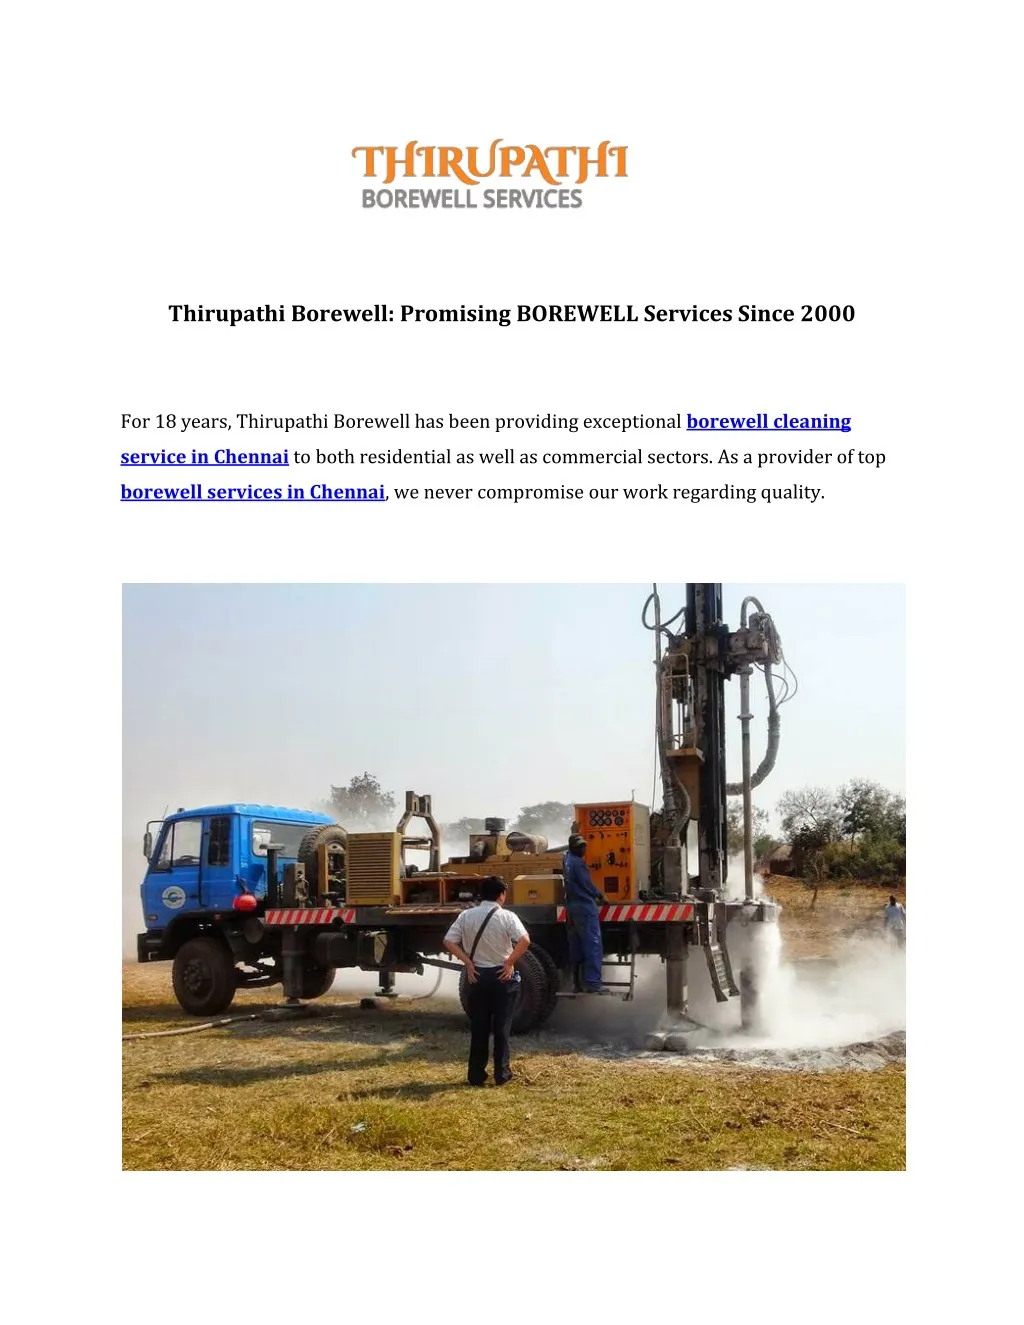 thirupathi borewell promising borewell services